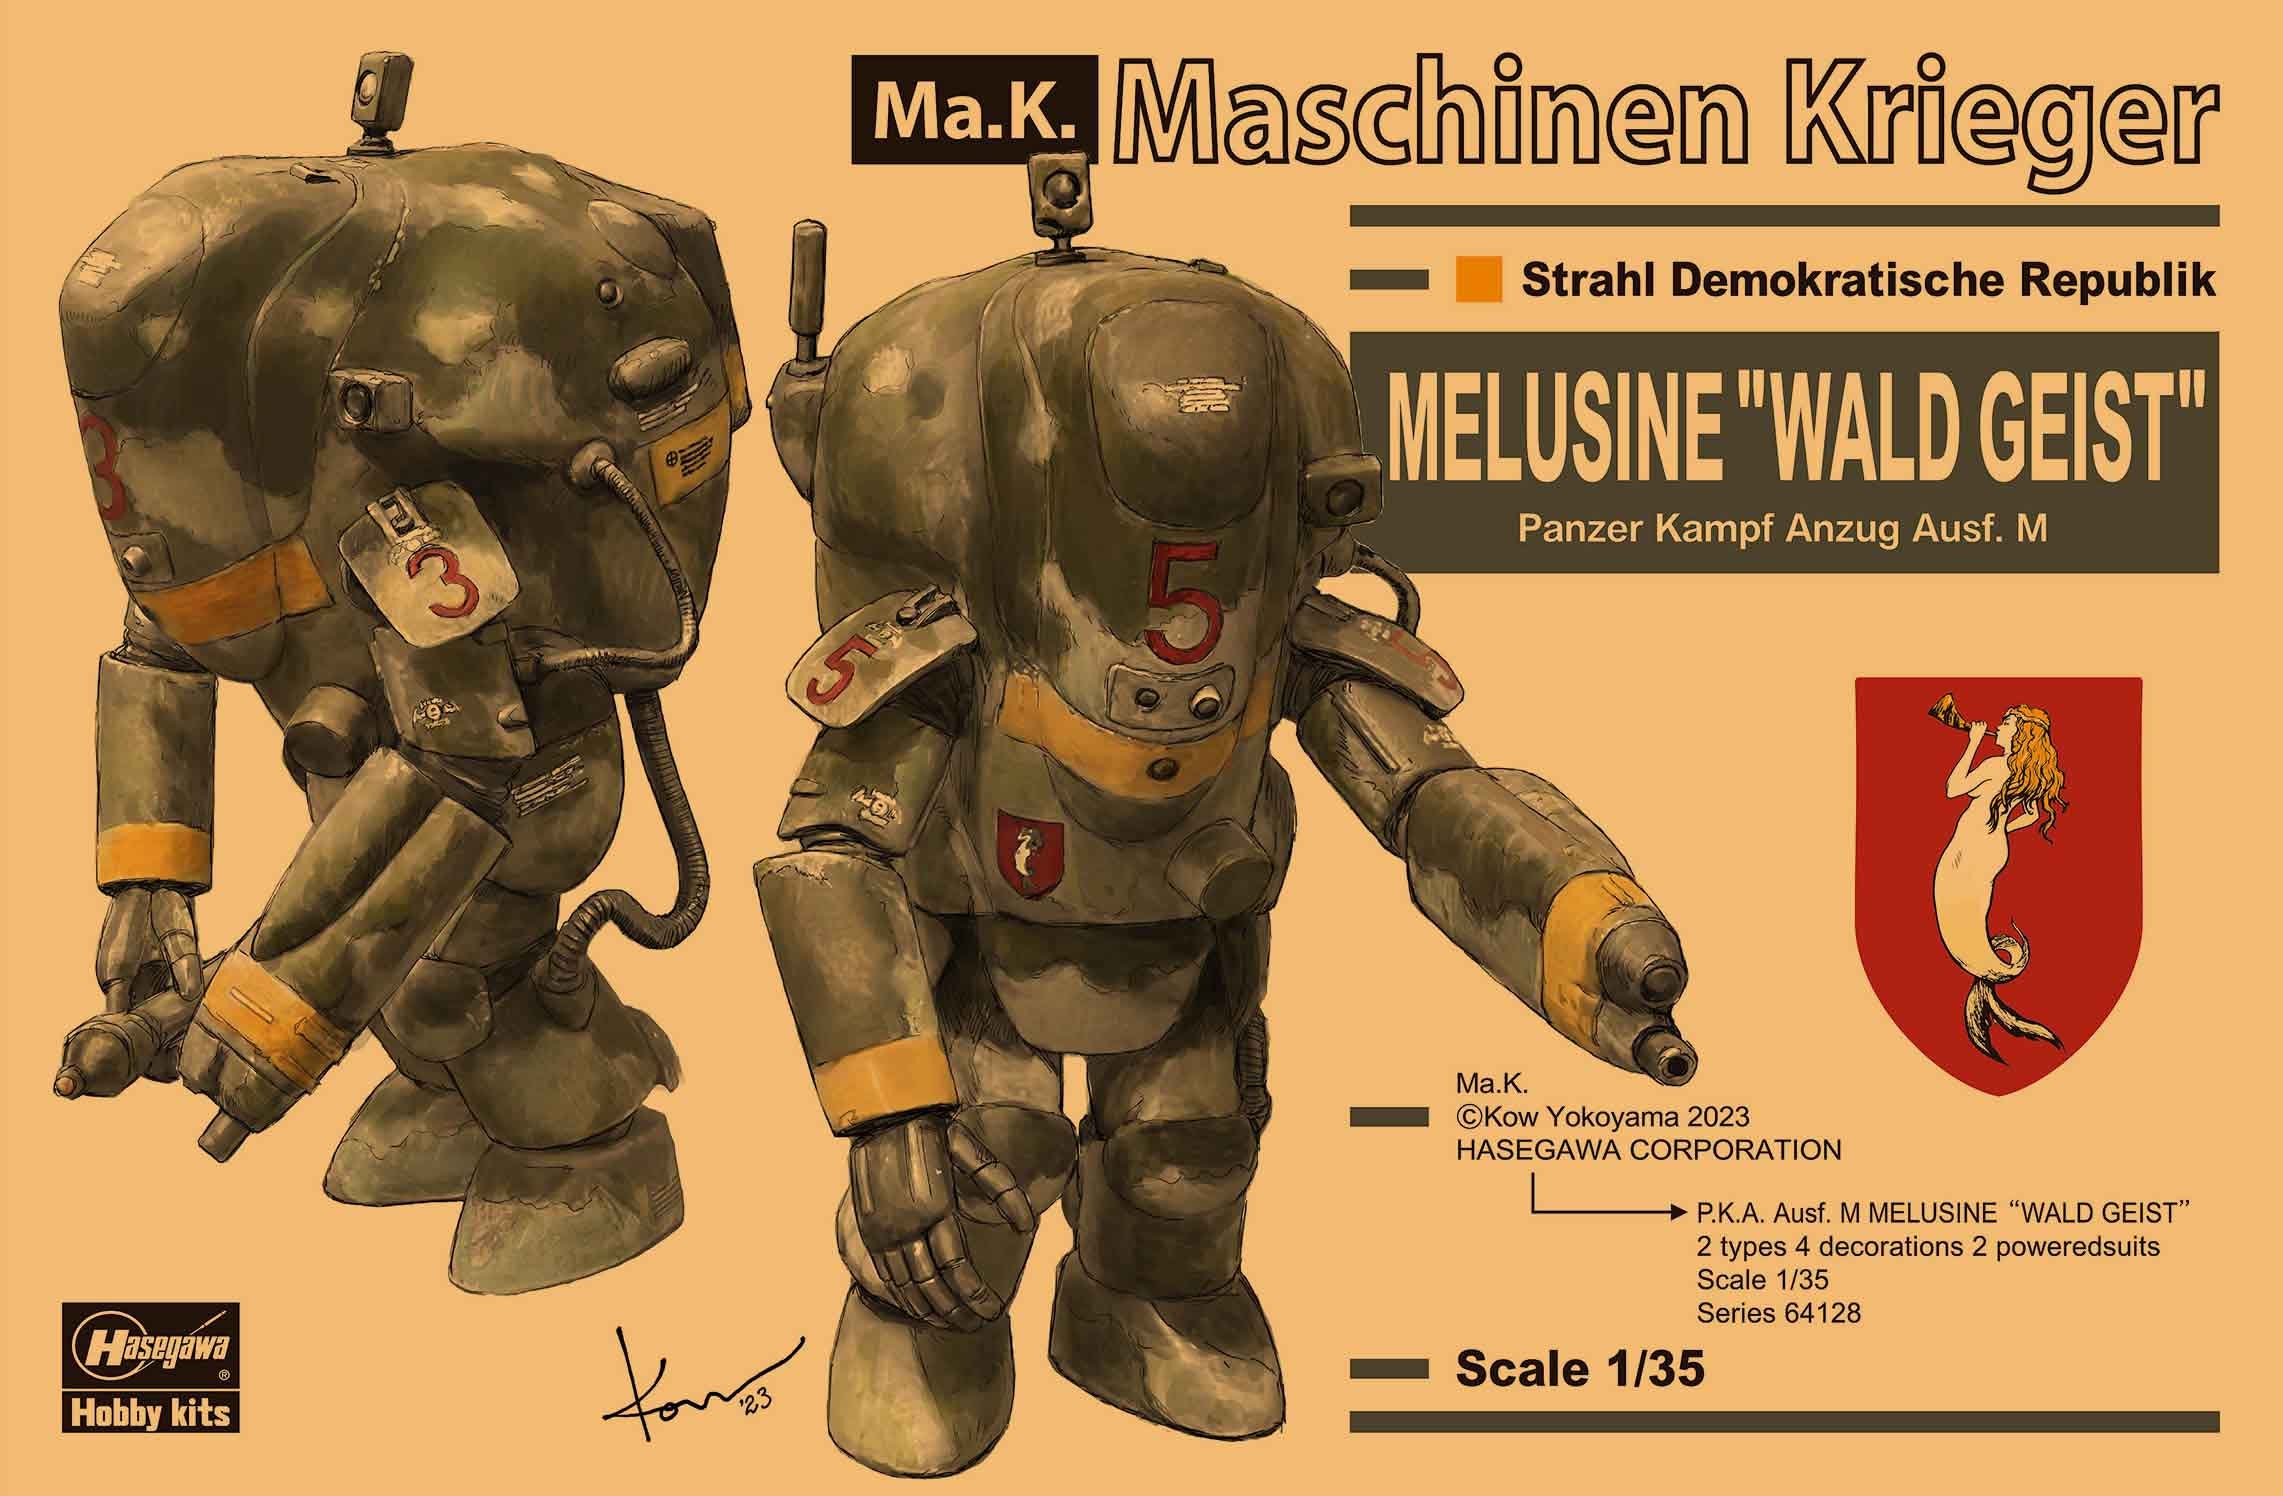 Maschinen Krieger P.K.A. Ausf. M Melusine Wald Geist (Two Kits) 1/35 #64128 by Hasegawa